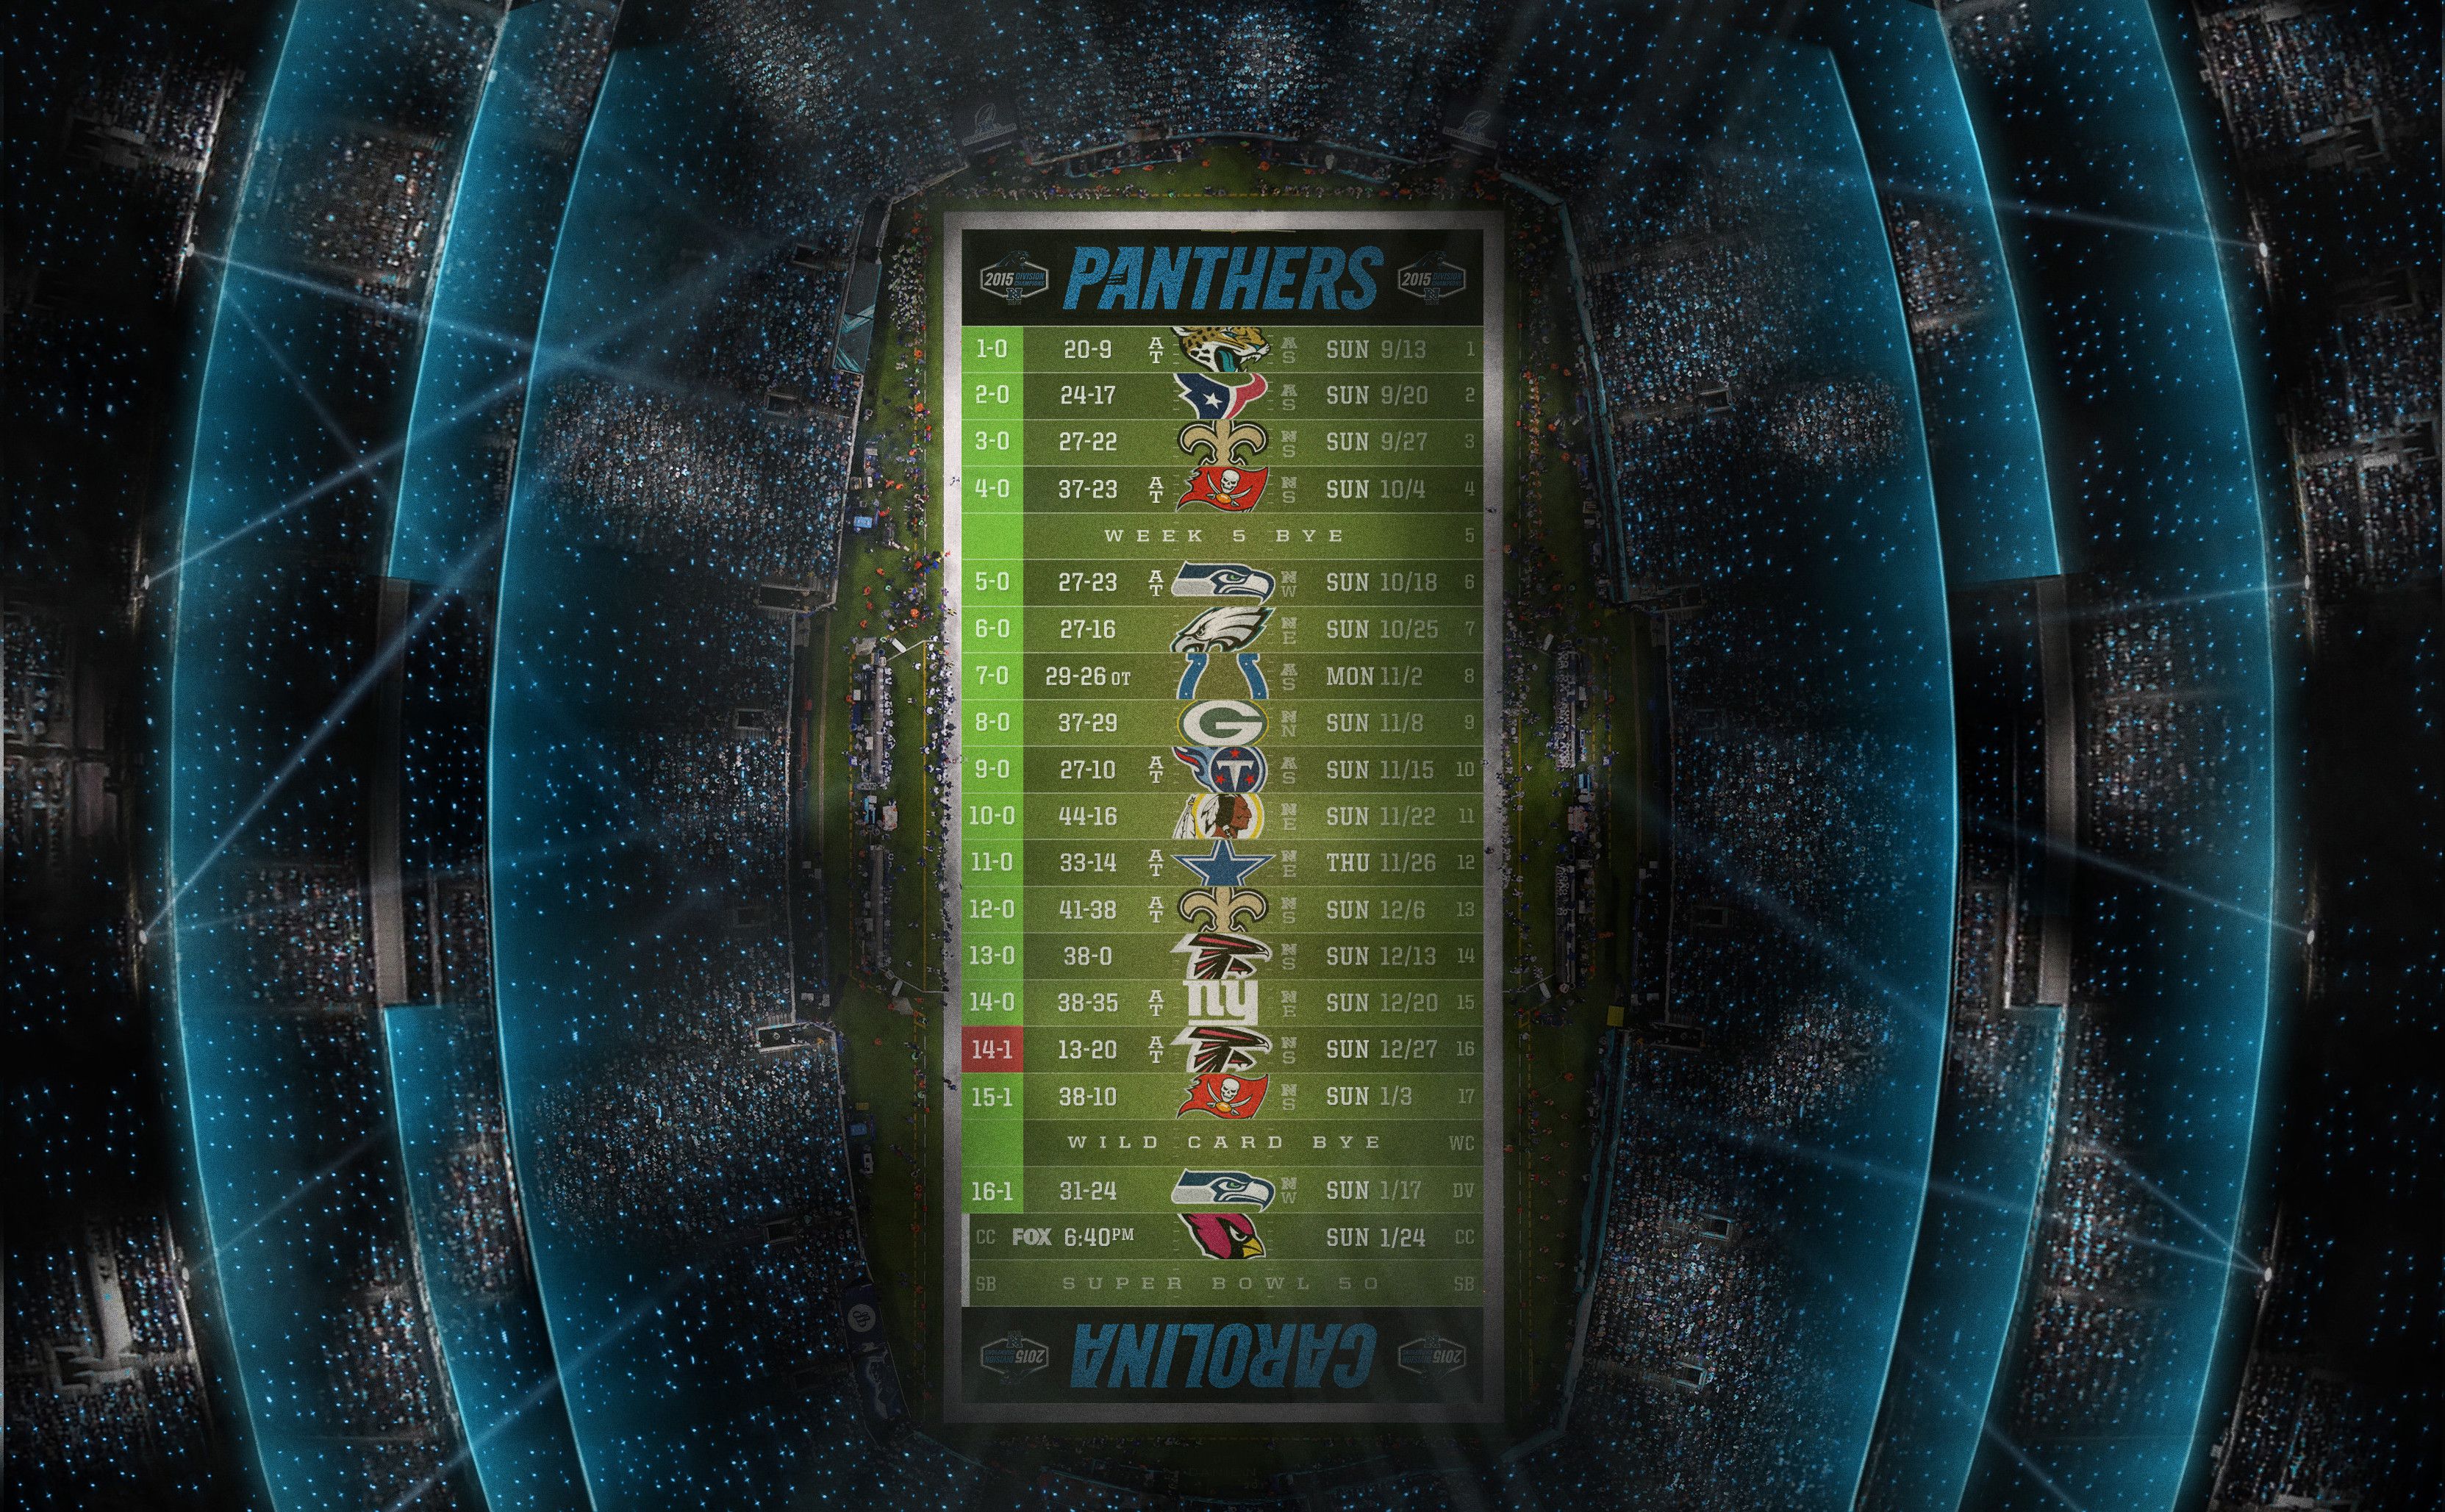 Updated stadium schedule wallpaper (NFC Championship)